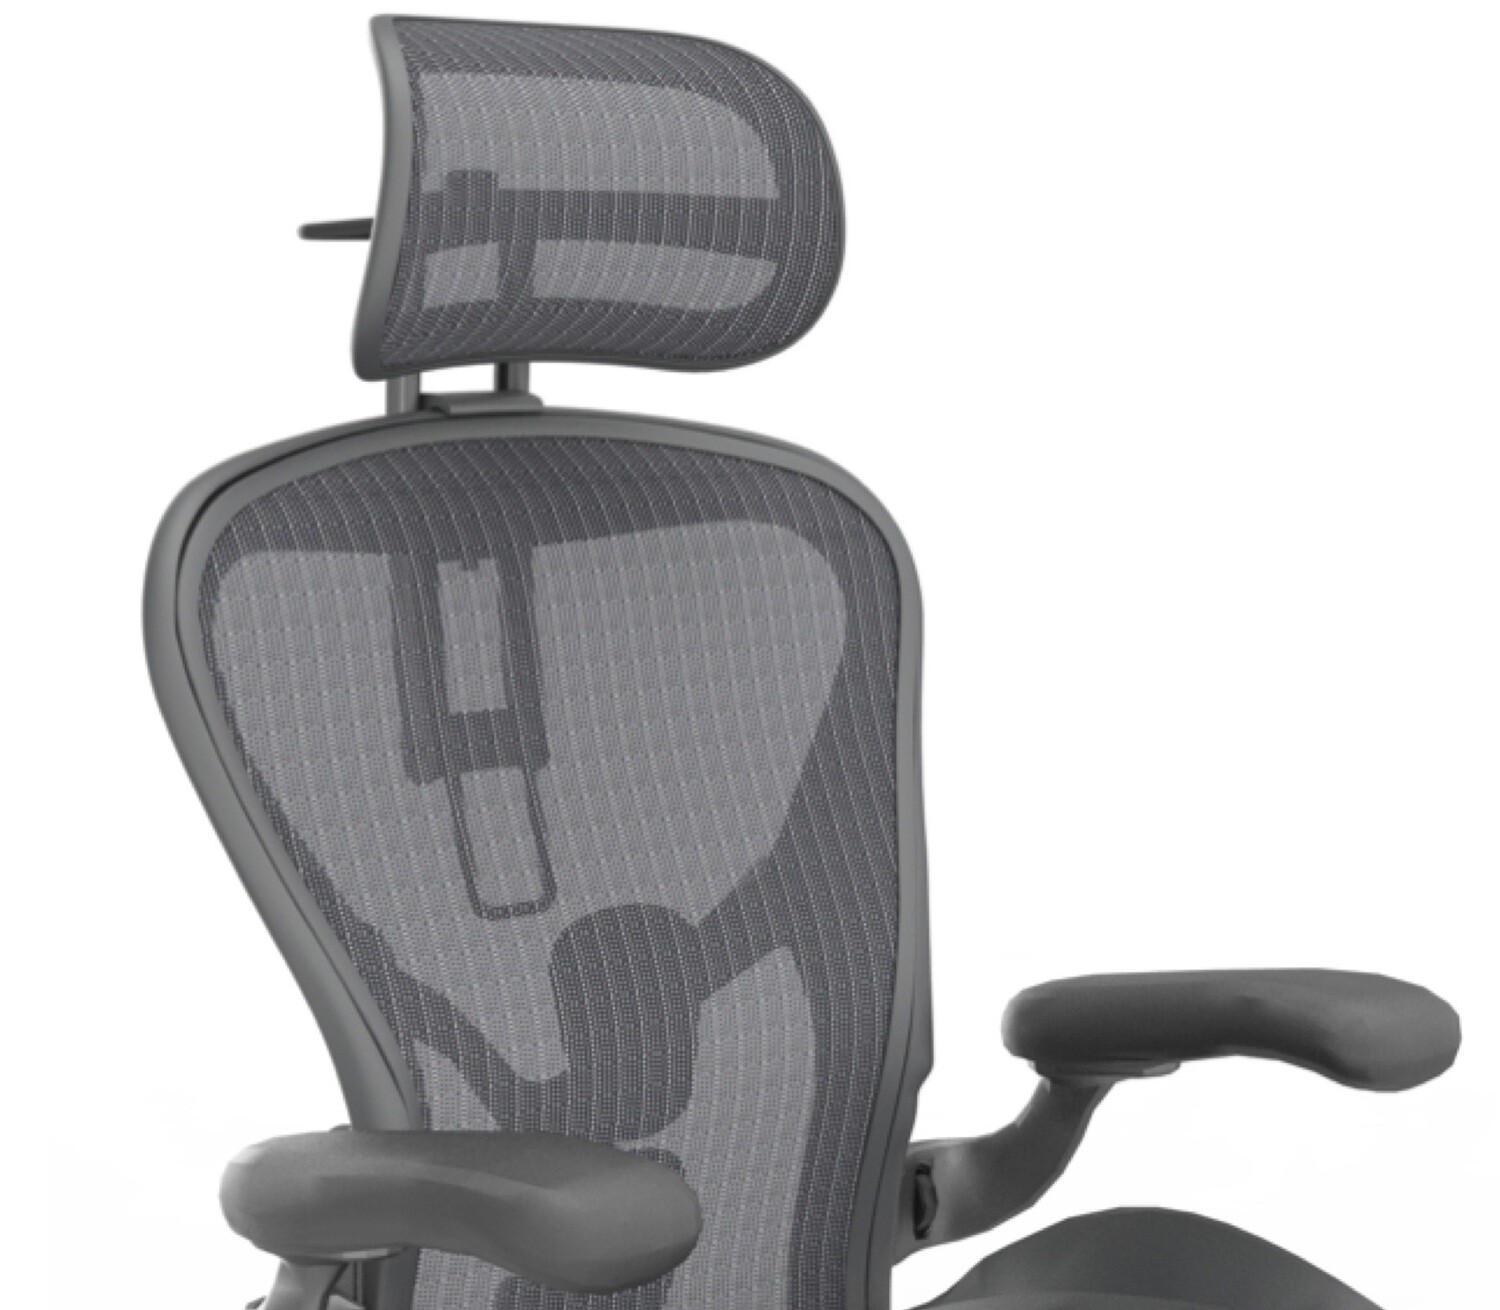 Remastered Graphite Atlas Suspension Headrest for Herman Miller Aeron Chair 